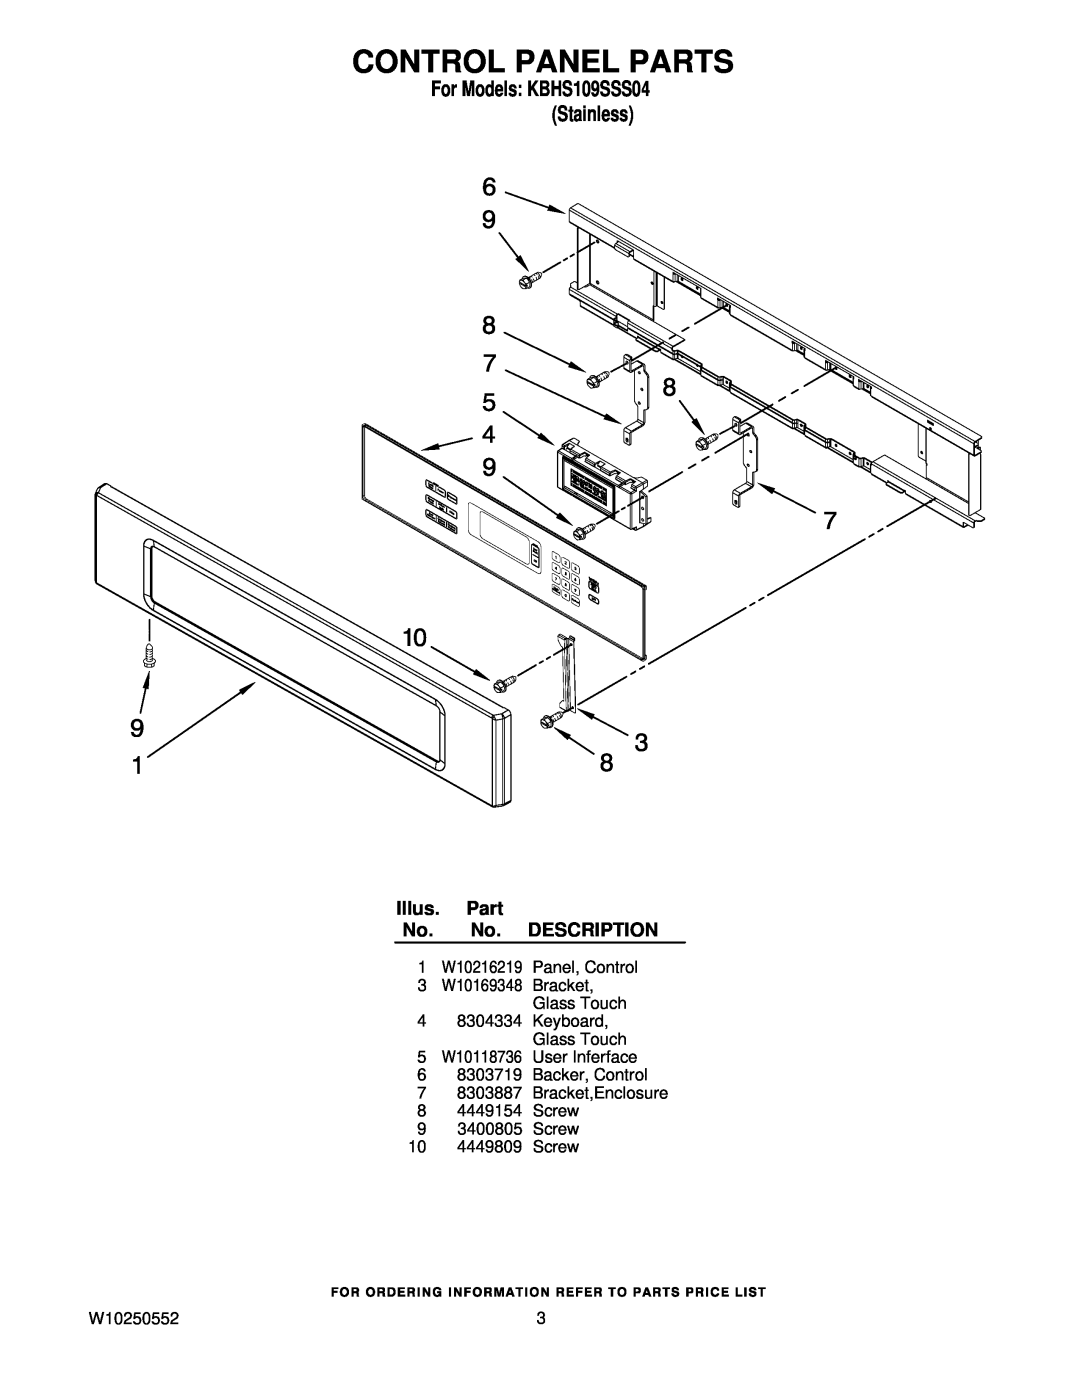 KitchenAid manual Control Panel Parts, Illus. Part No. No. DESCRIPTION, For Models KBHS109SSS04 Stainless 